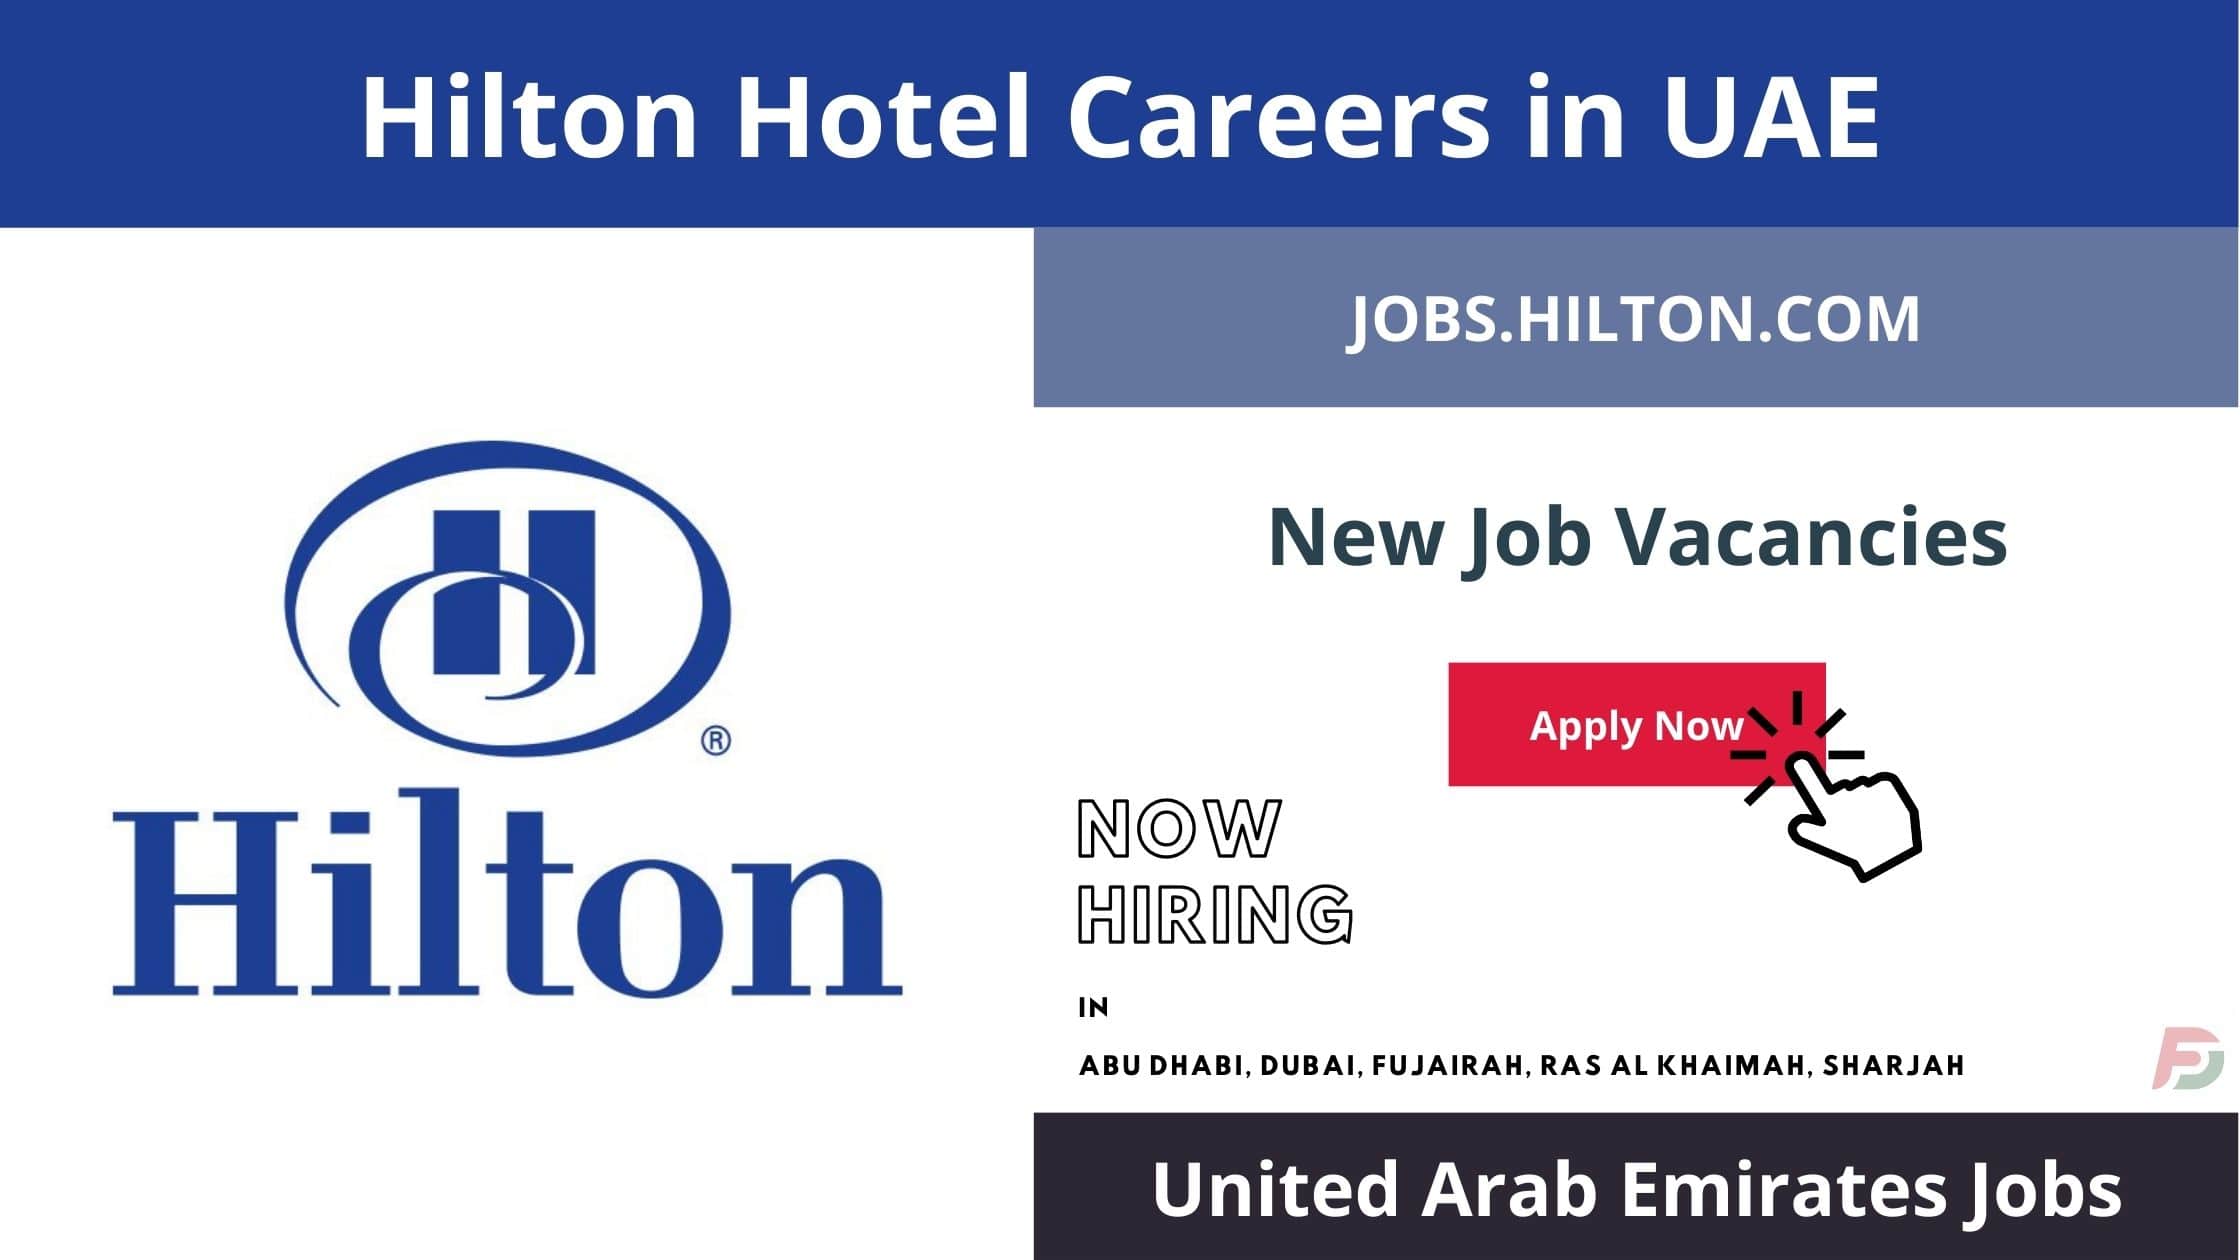 Hilton Hotel Careers in UAE